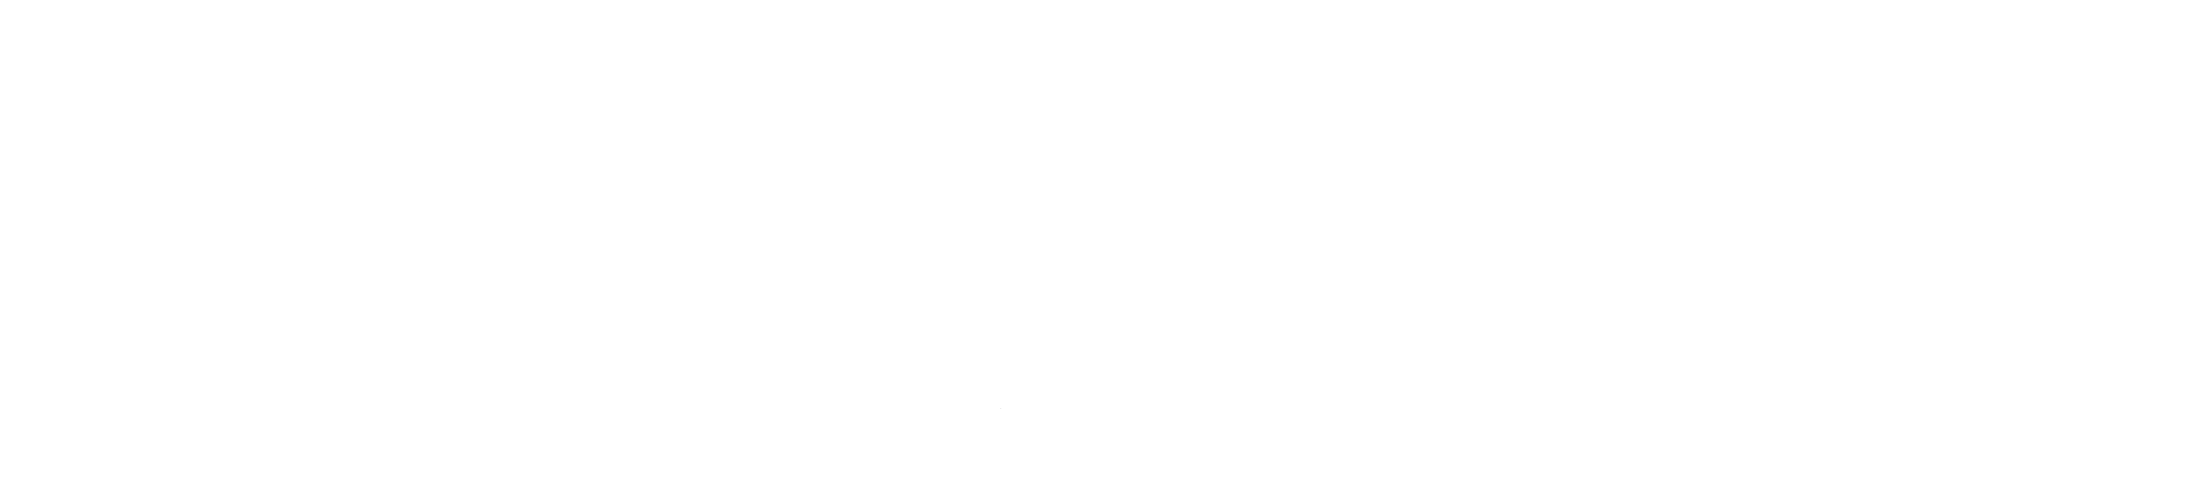 logo-transparent-png-white-header